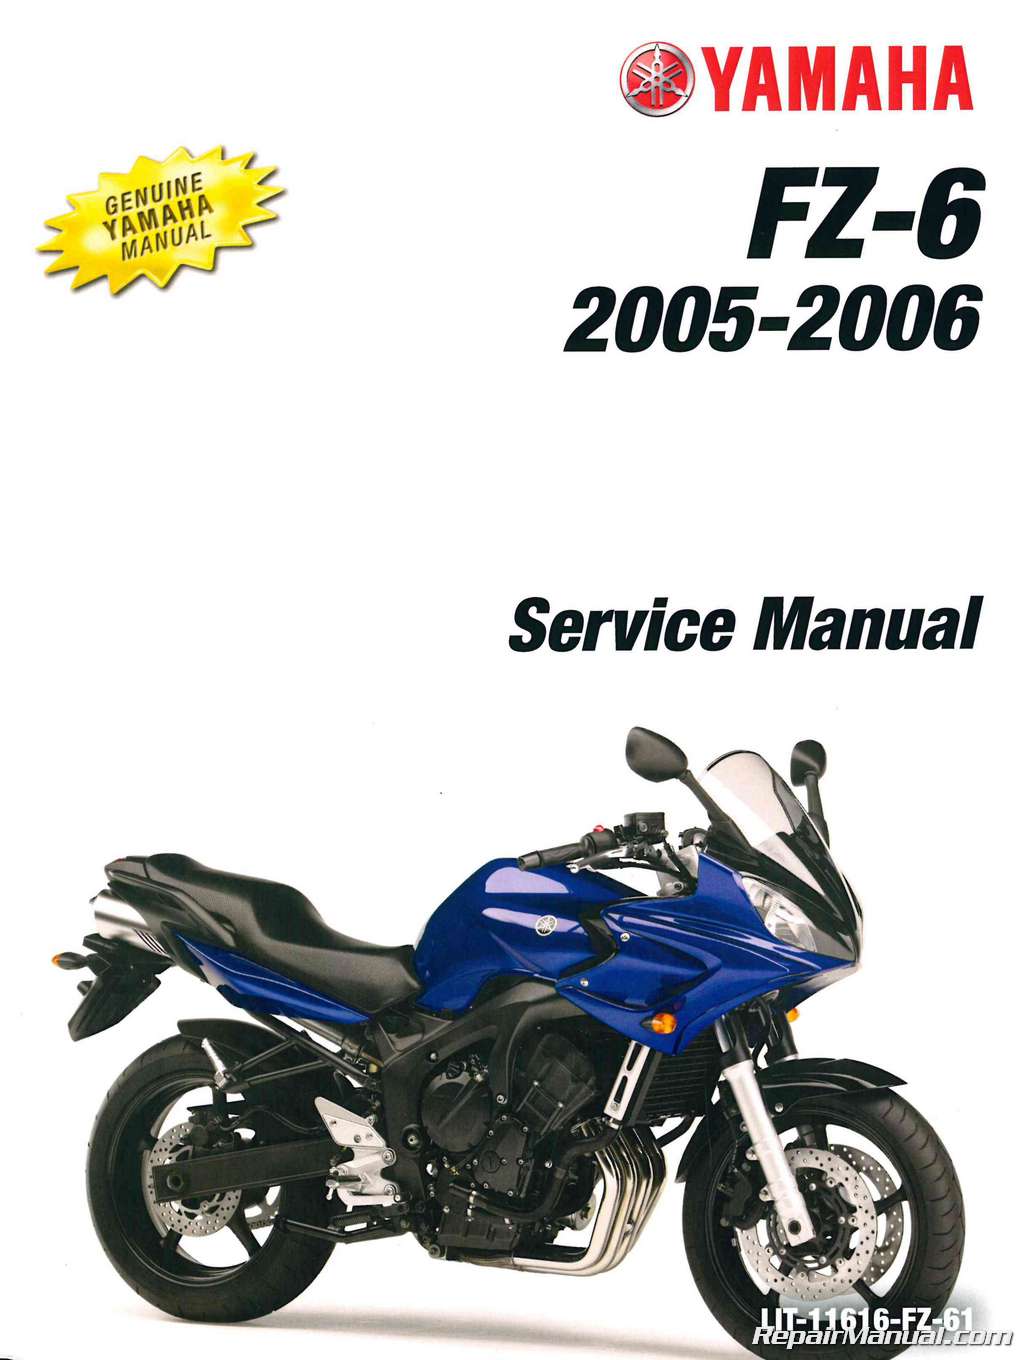 ... Repair Manuals / Yamaha Motorcycle Manuals / 2004-2006 Yamaha FZ6